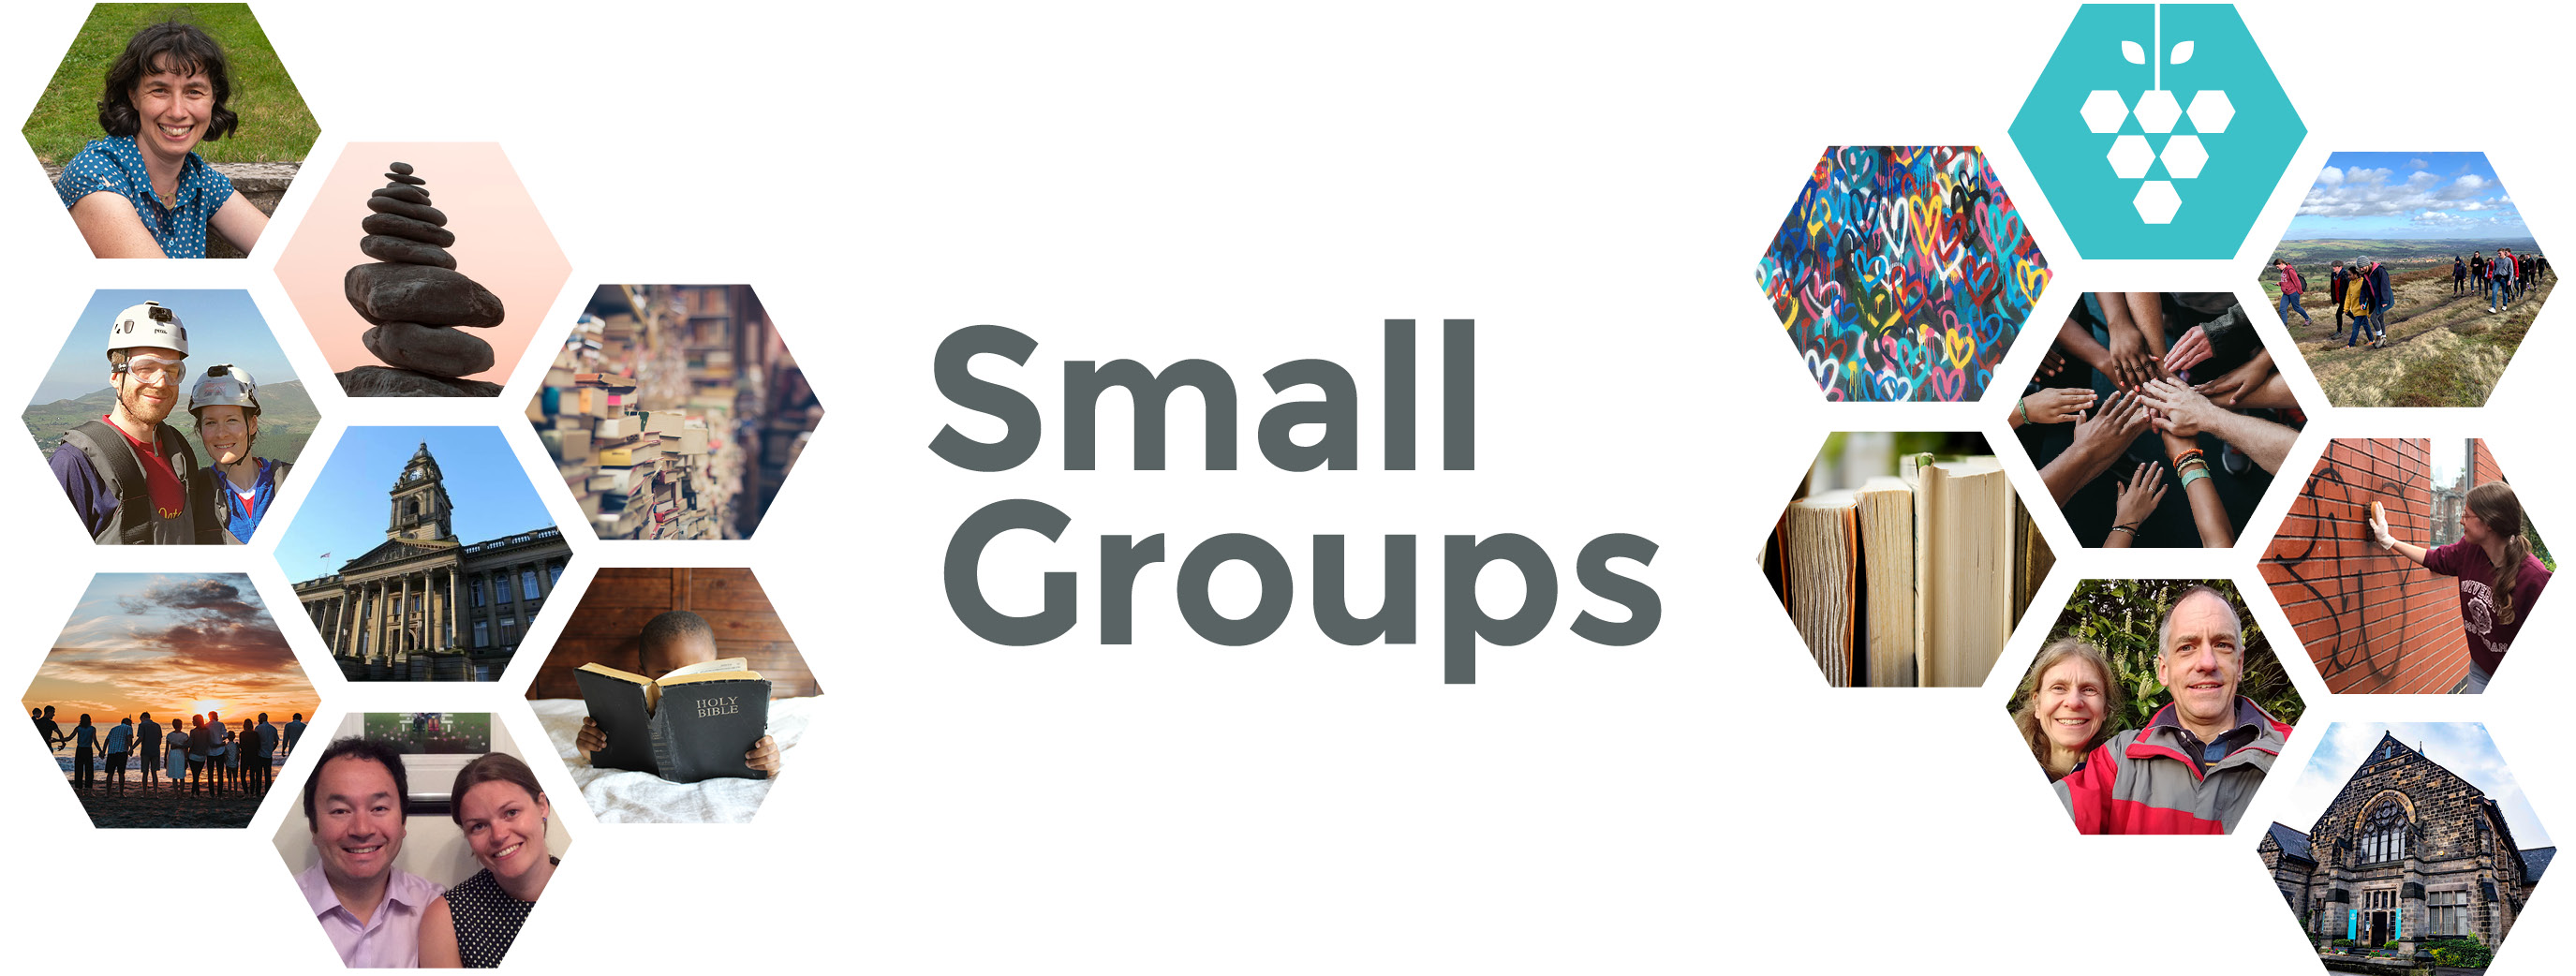 Small Groups Summer 2021 Websi